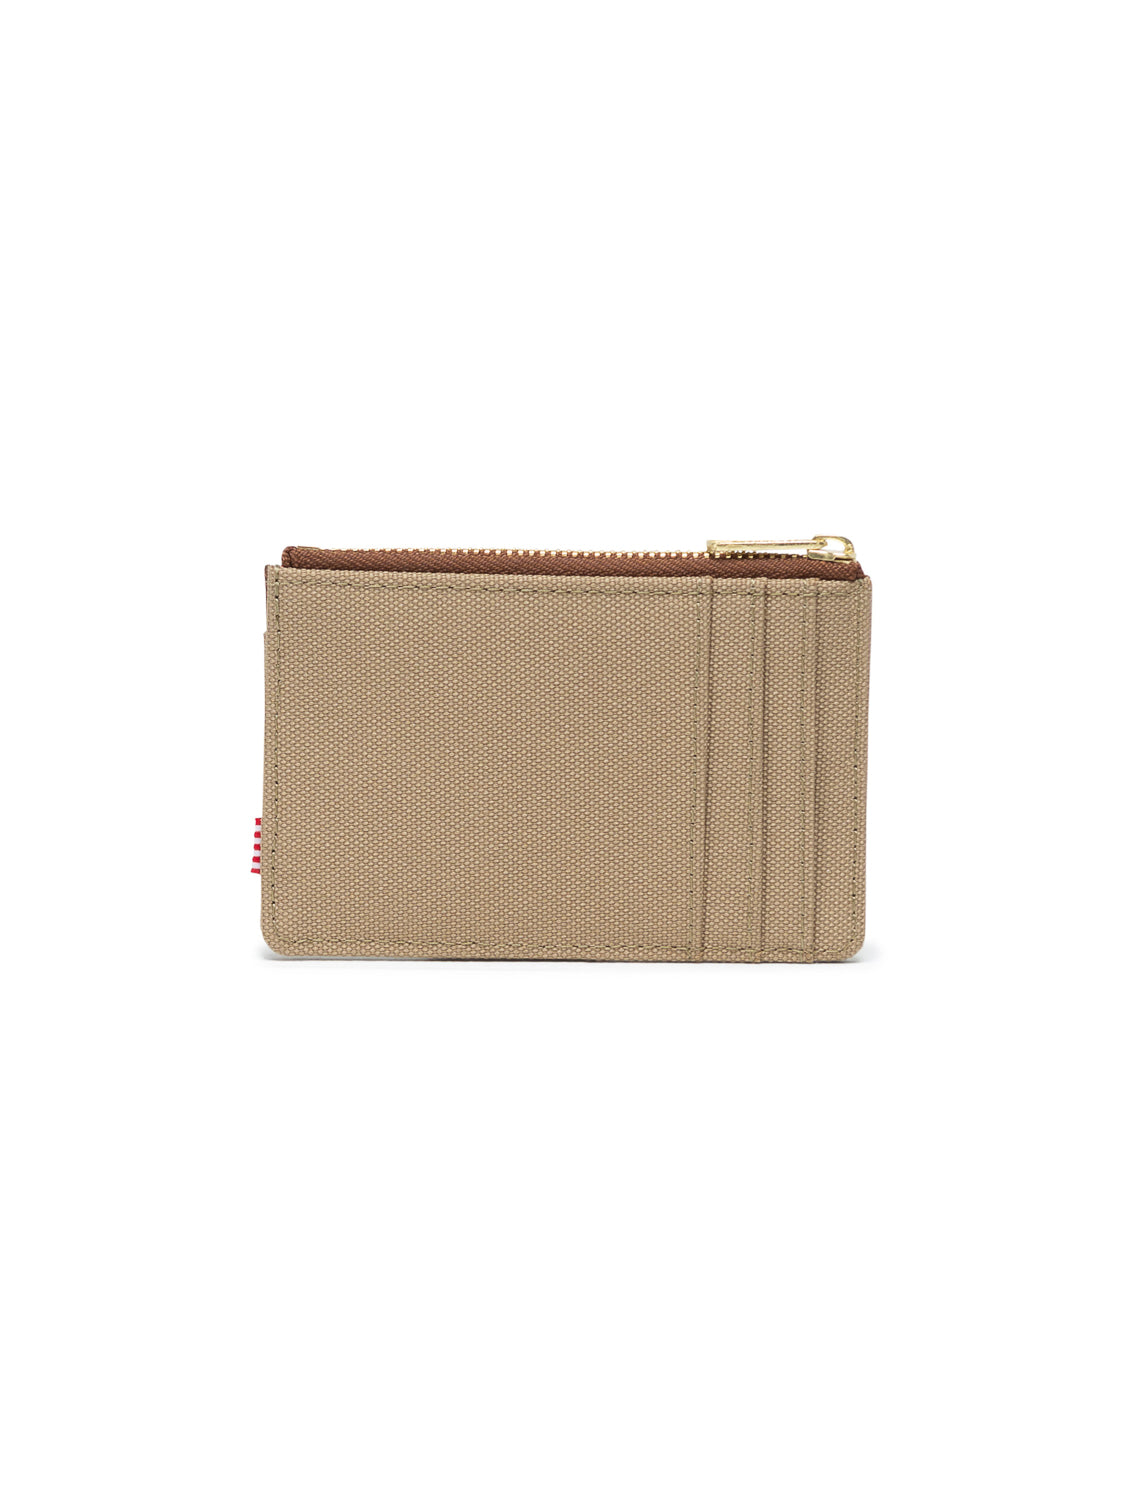 Herschel Oscar Compact Wallet